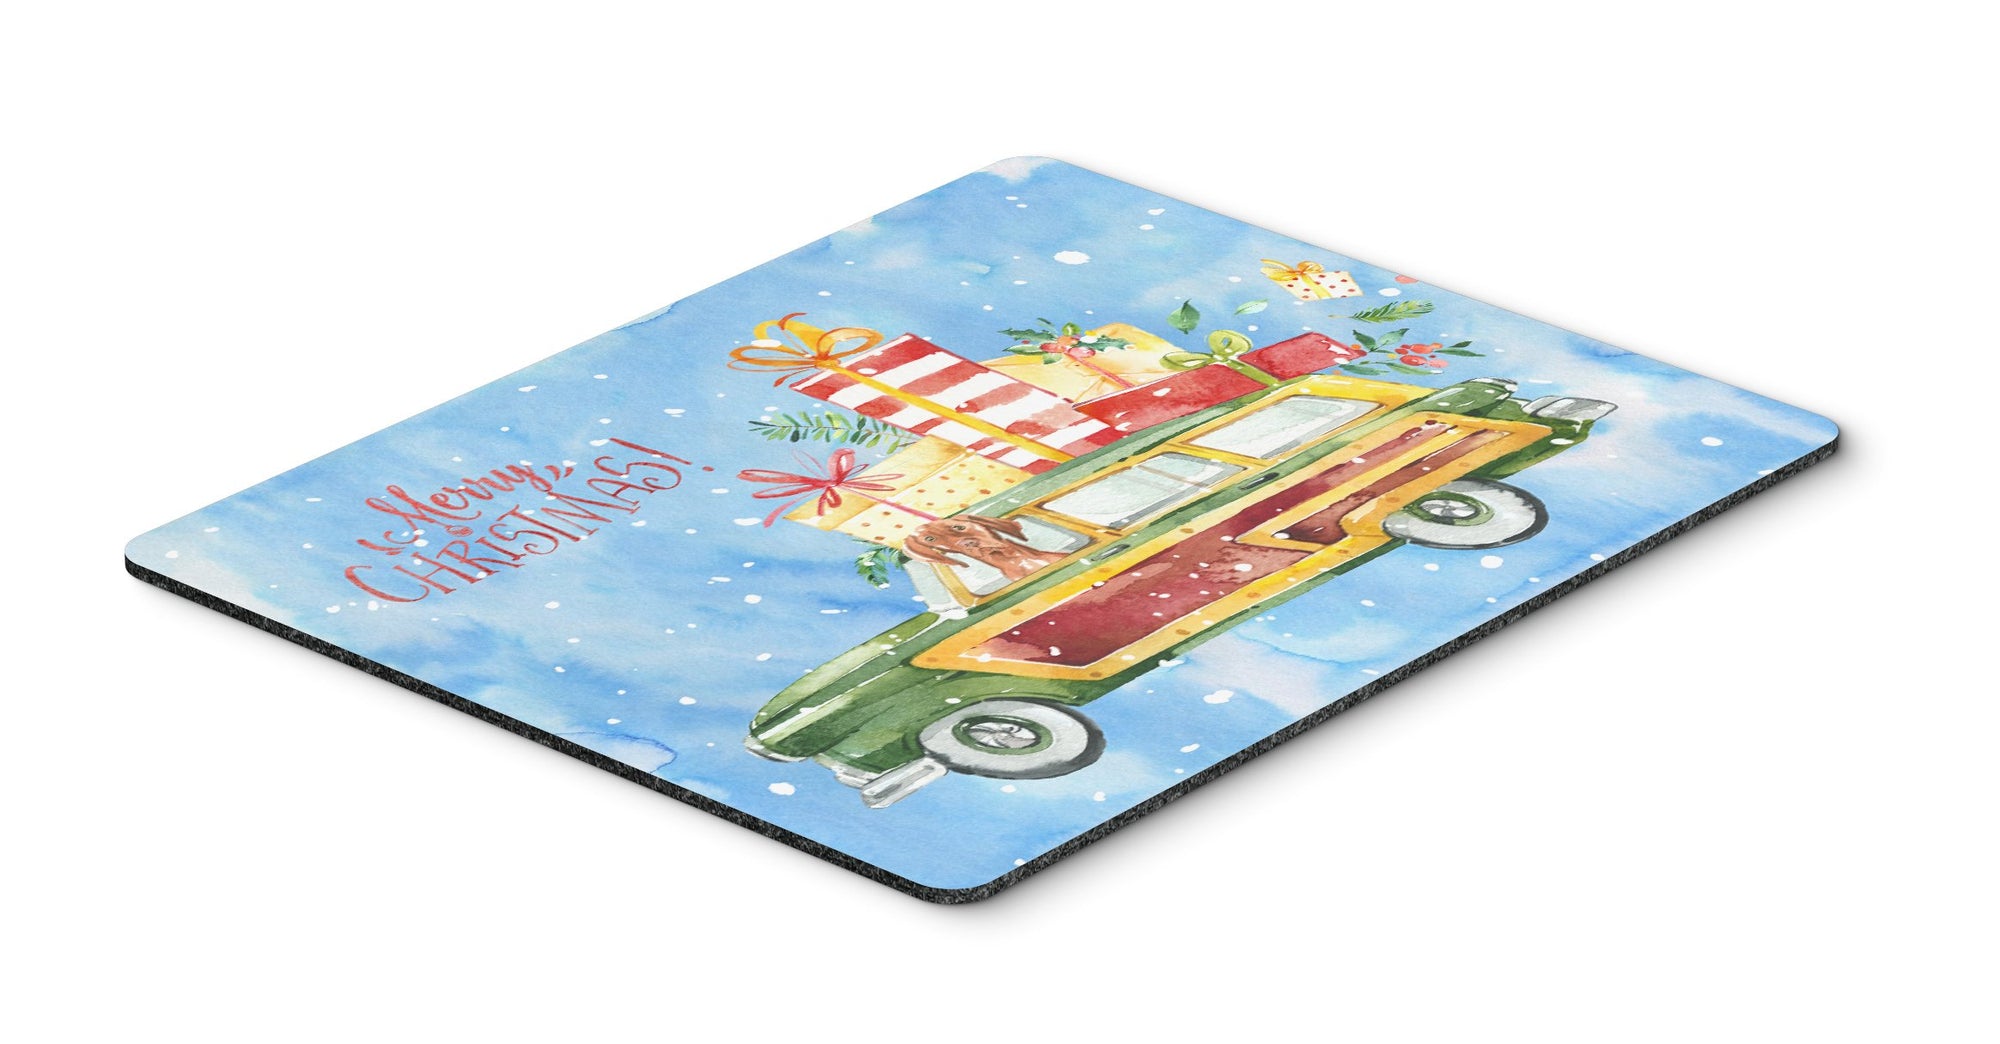 Merry Christmas Vizsla Mouse Pad, Hot Pad or Trivet CK2408MP by Caroline's Treasures